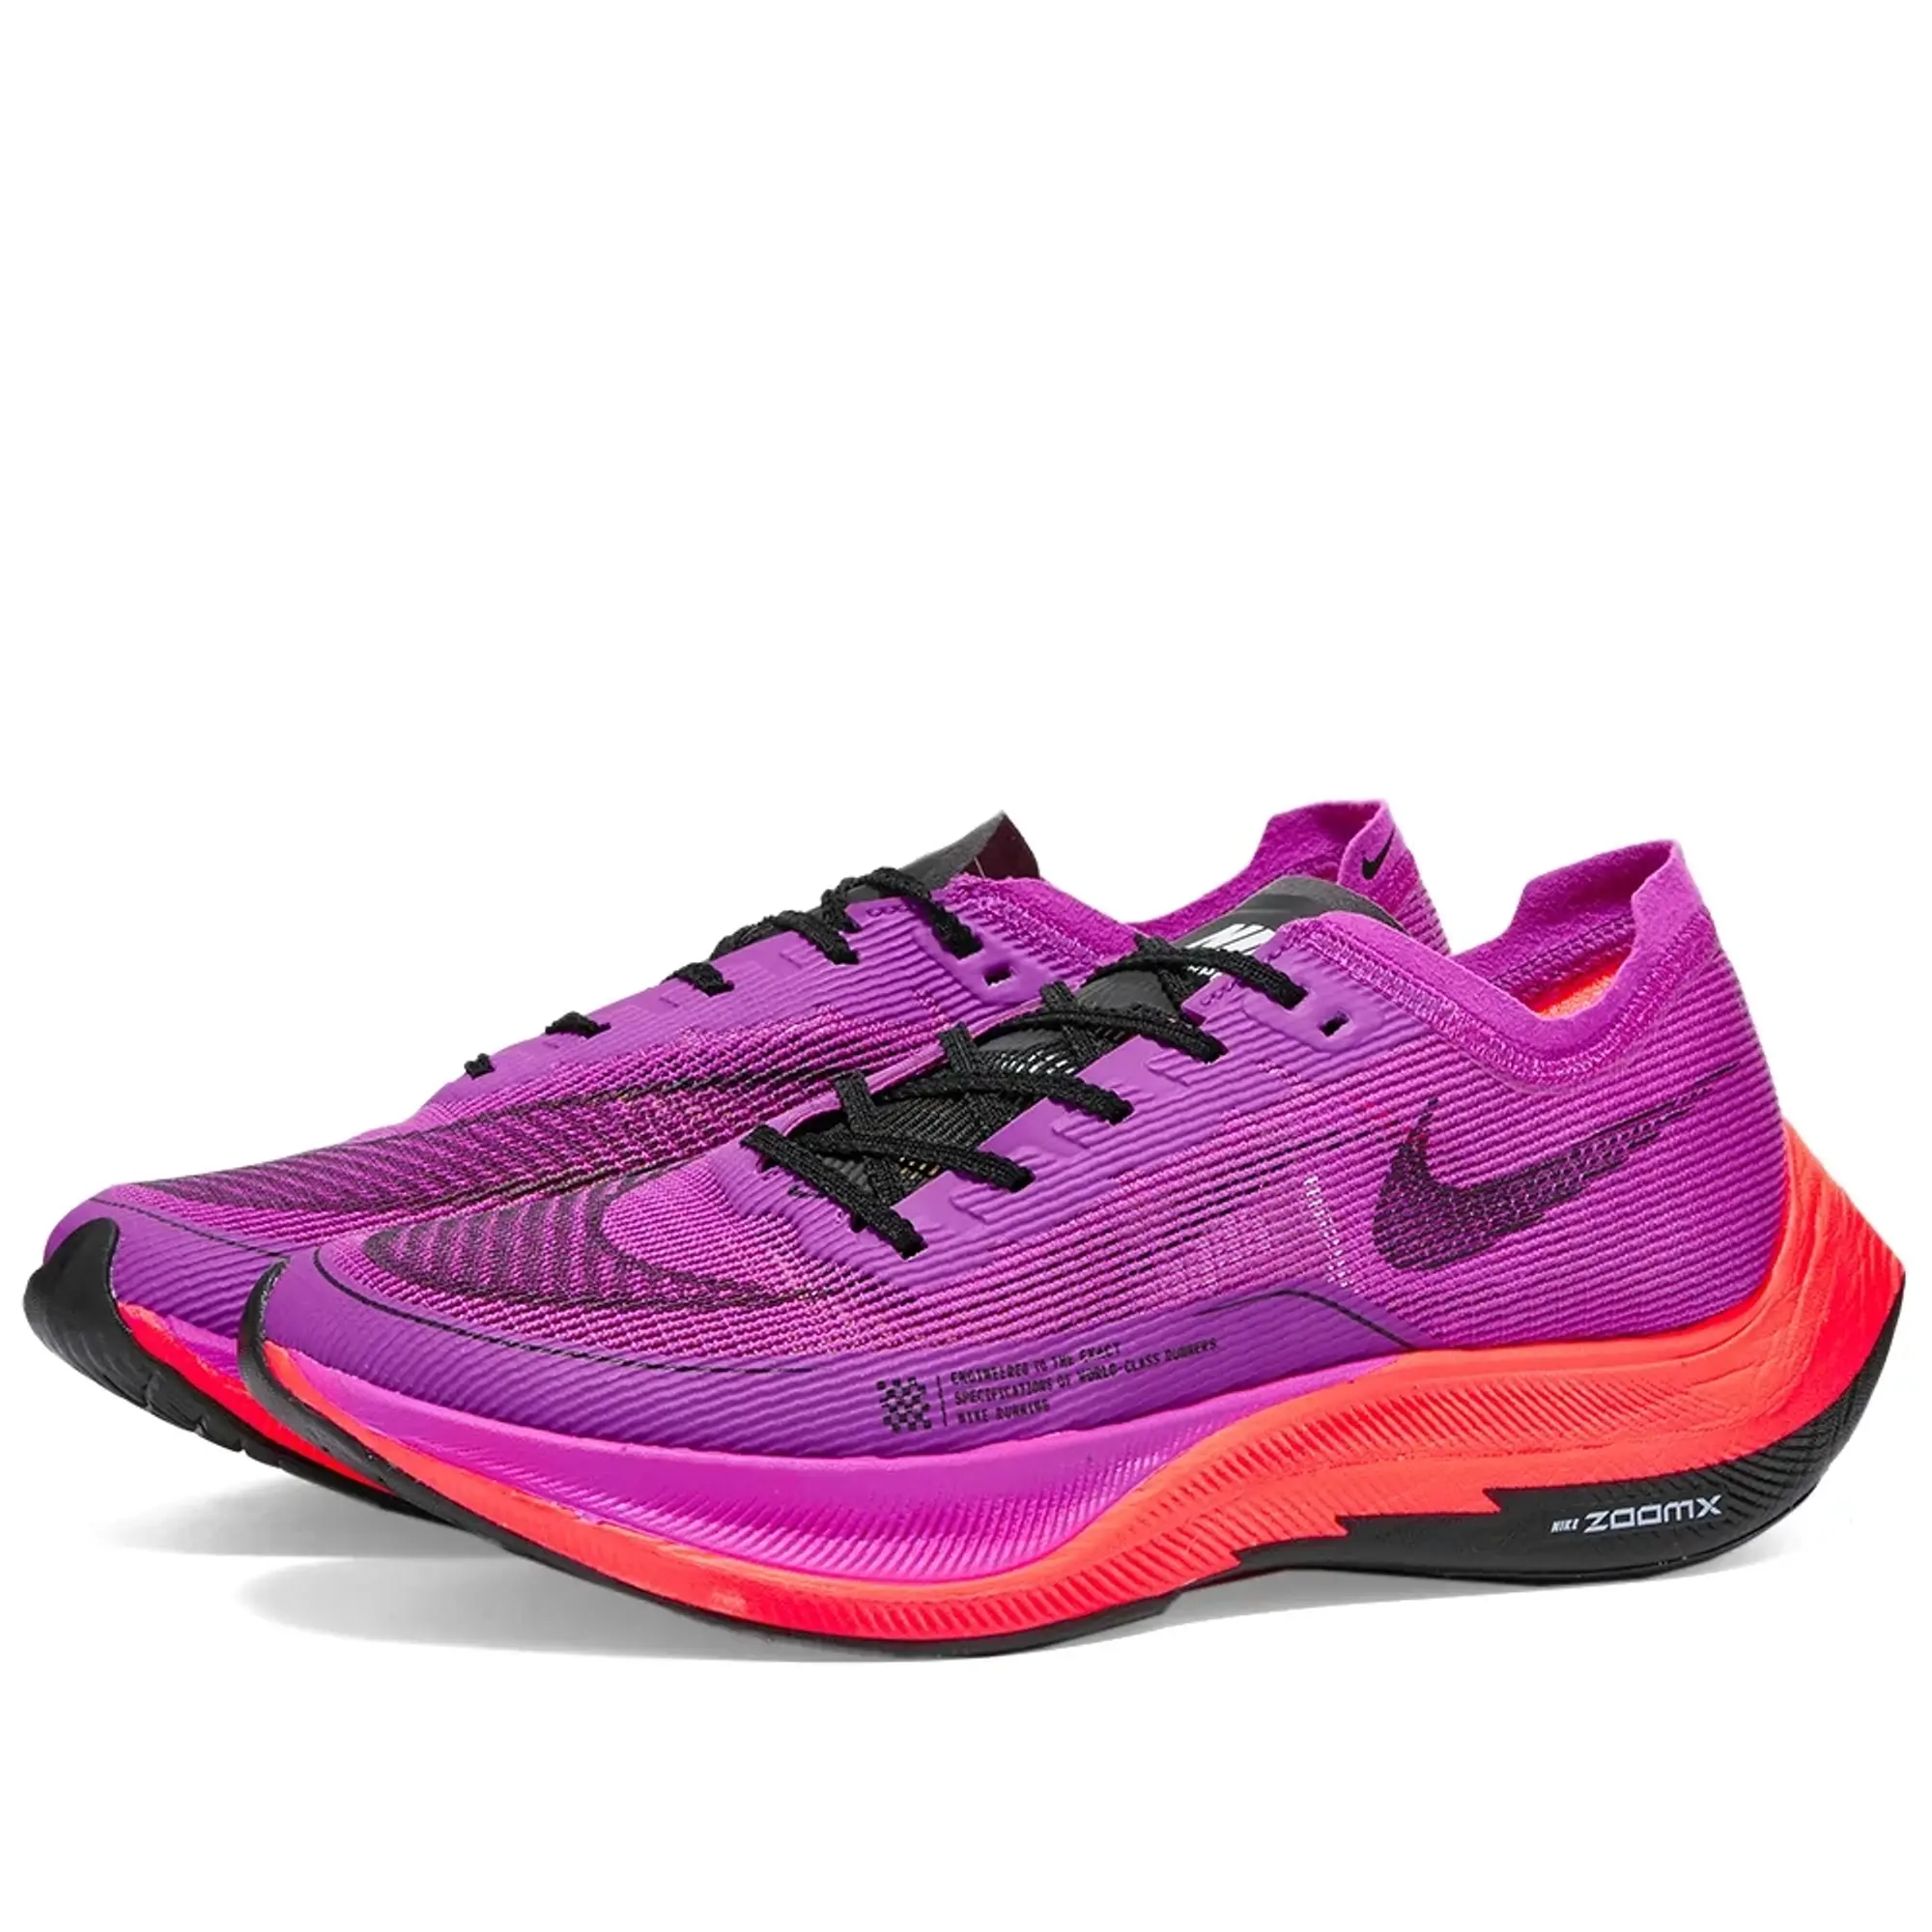 Nike ZoomX Vaporfly Next% 2 Women's Racing Shoe - Purple